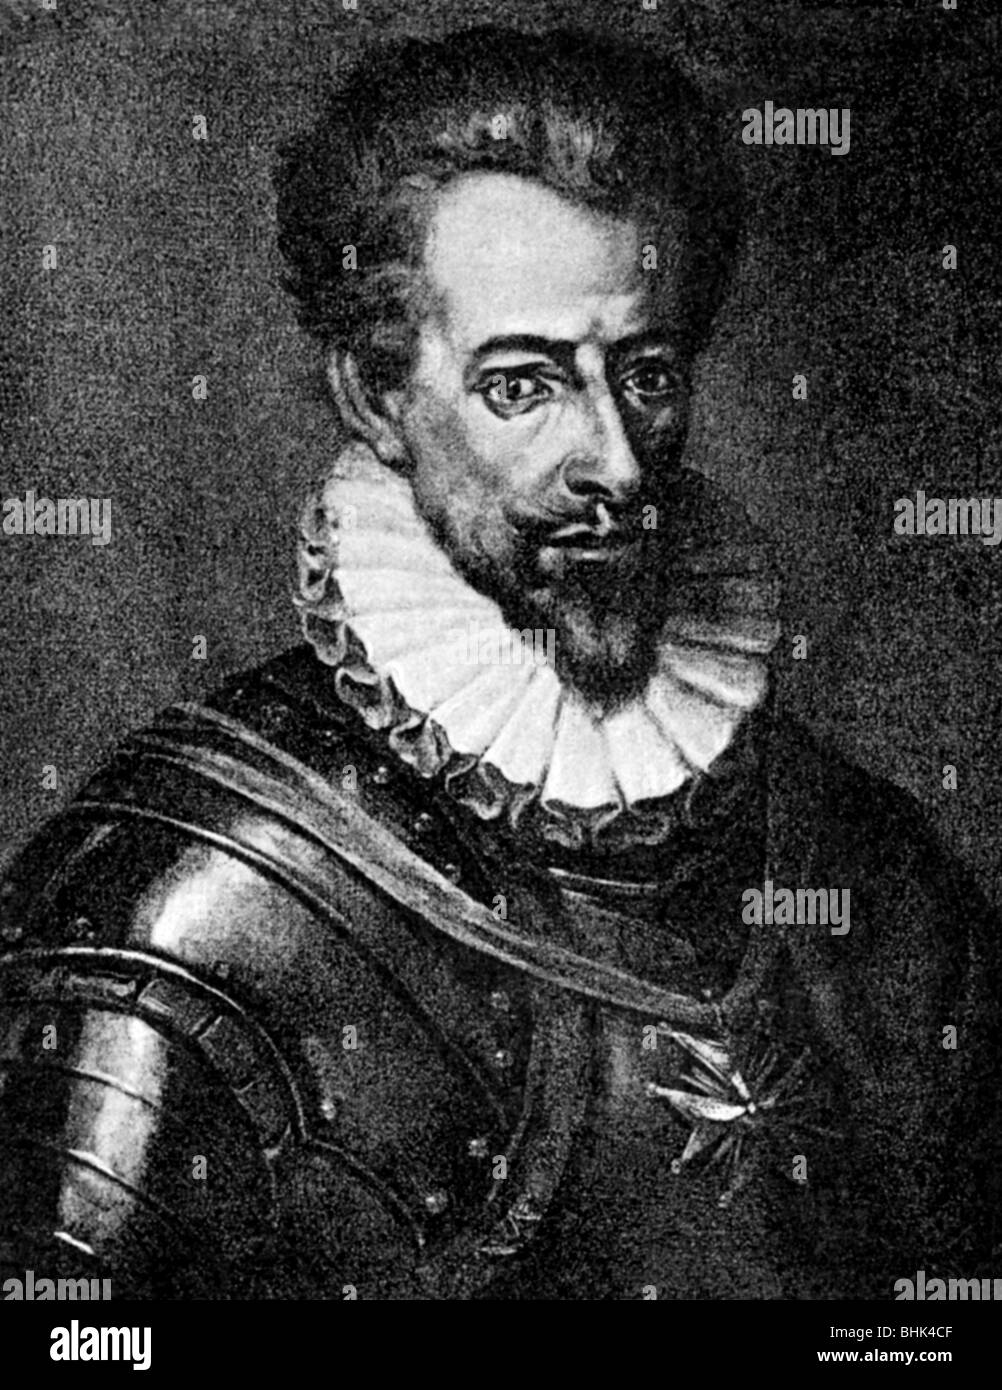 Guise, Henry I Duke of, 31.12.1550 - 23.12.1588, French politician, portrait, wood engraving, 19th century, , Stock Photo